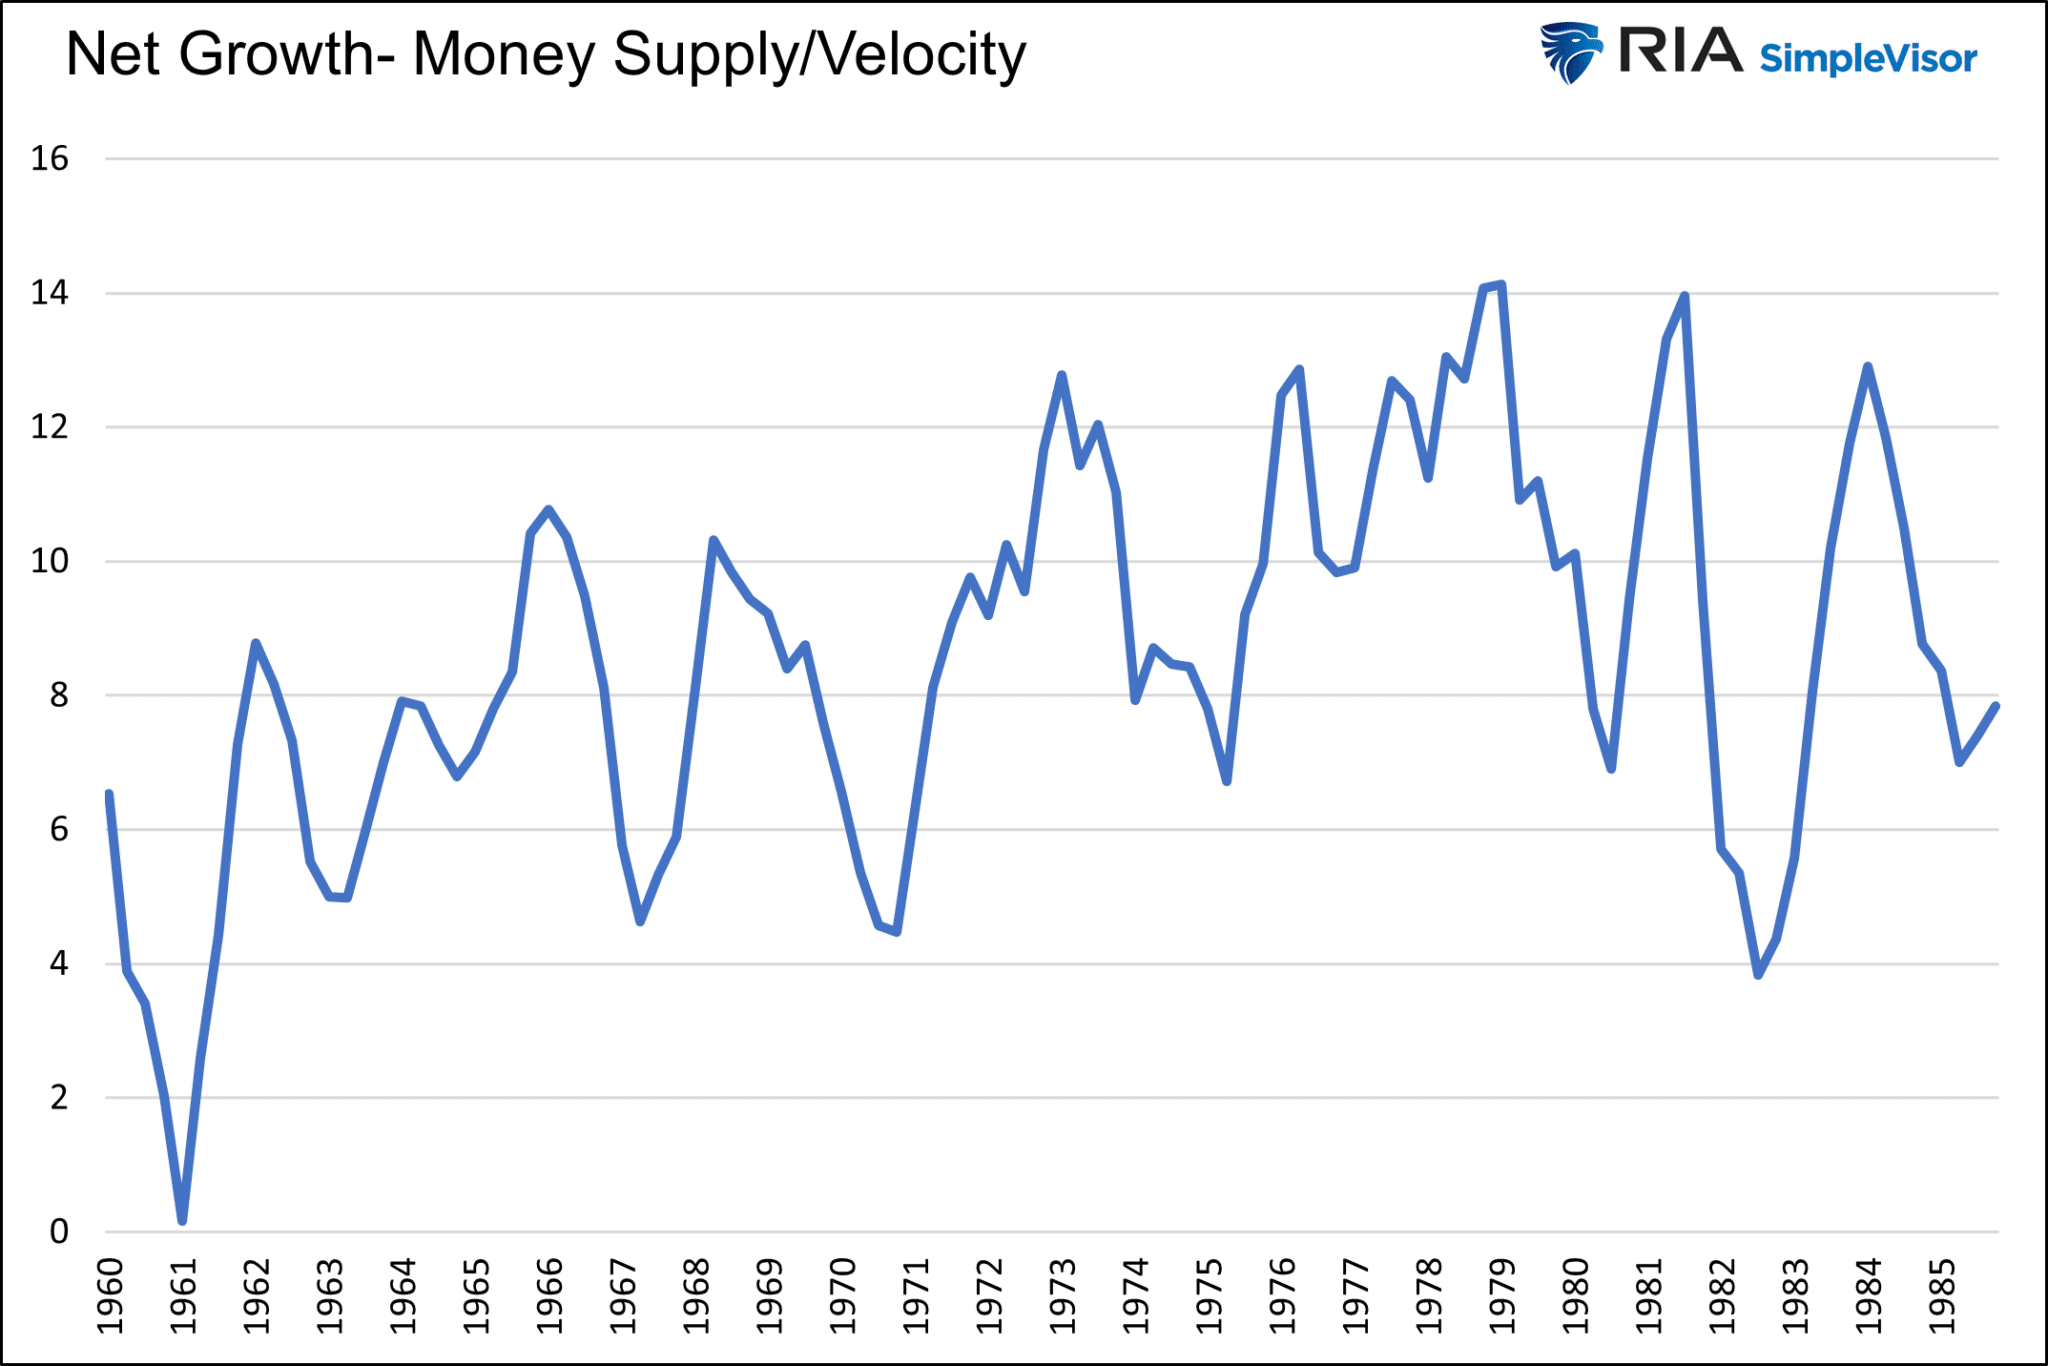 Net-Growth Money Supply and Velocity